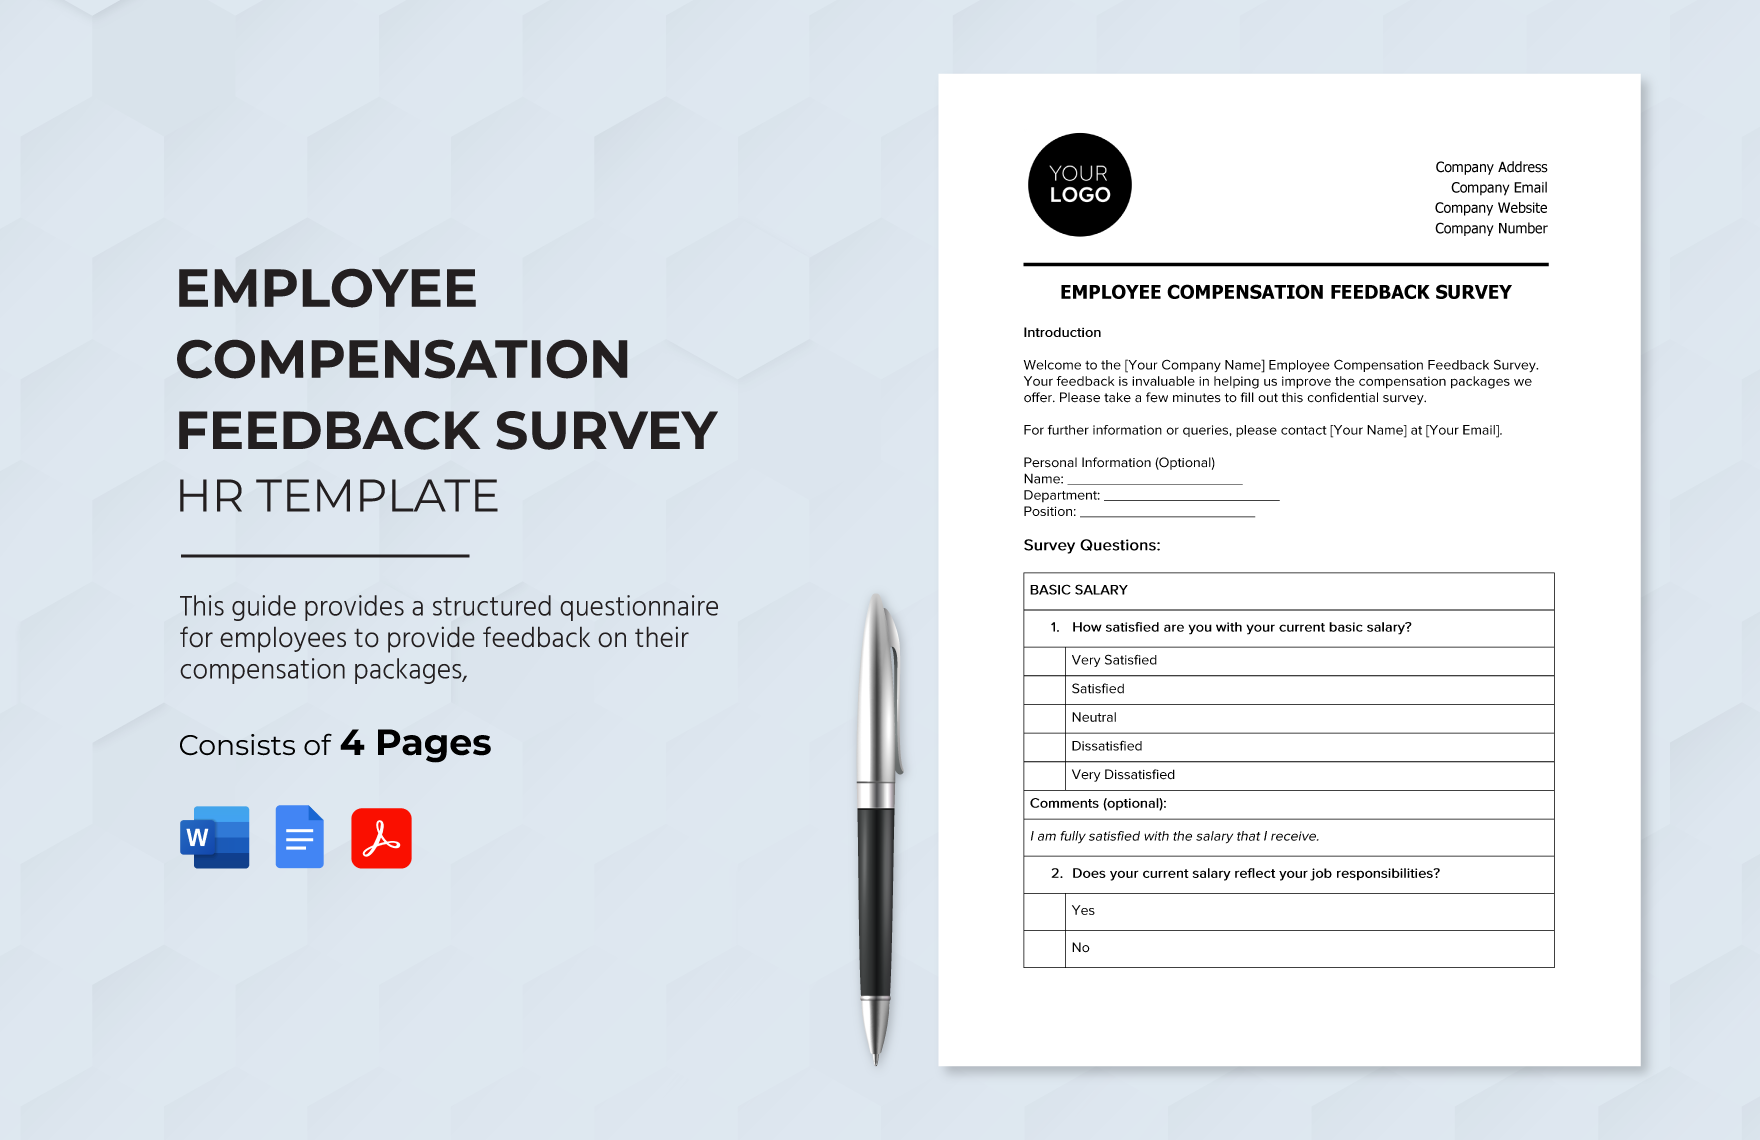 Employee Compensation Feedback Survey HR Template in Word, Google Docs, PDF